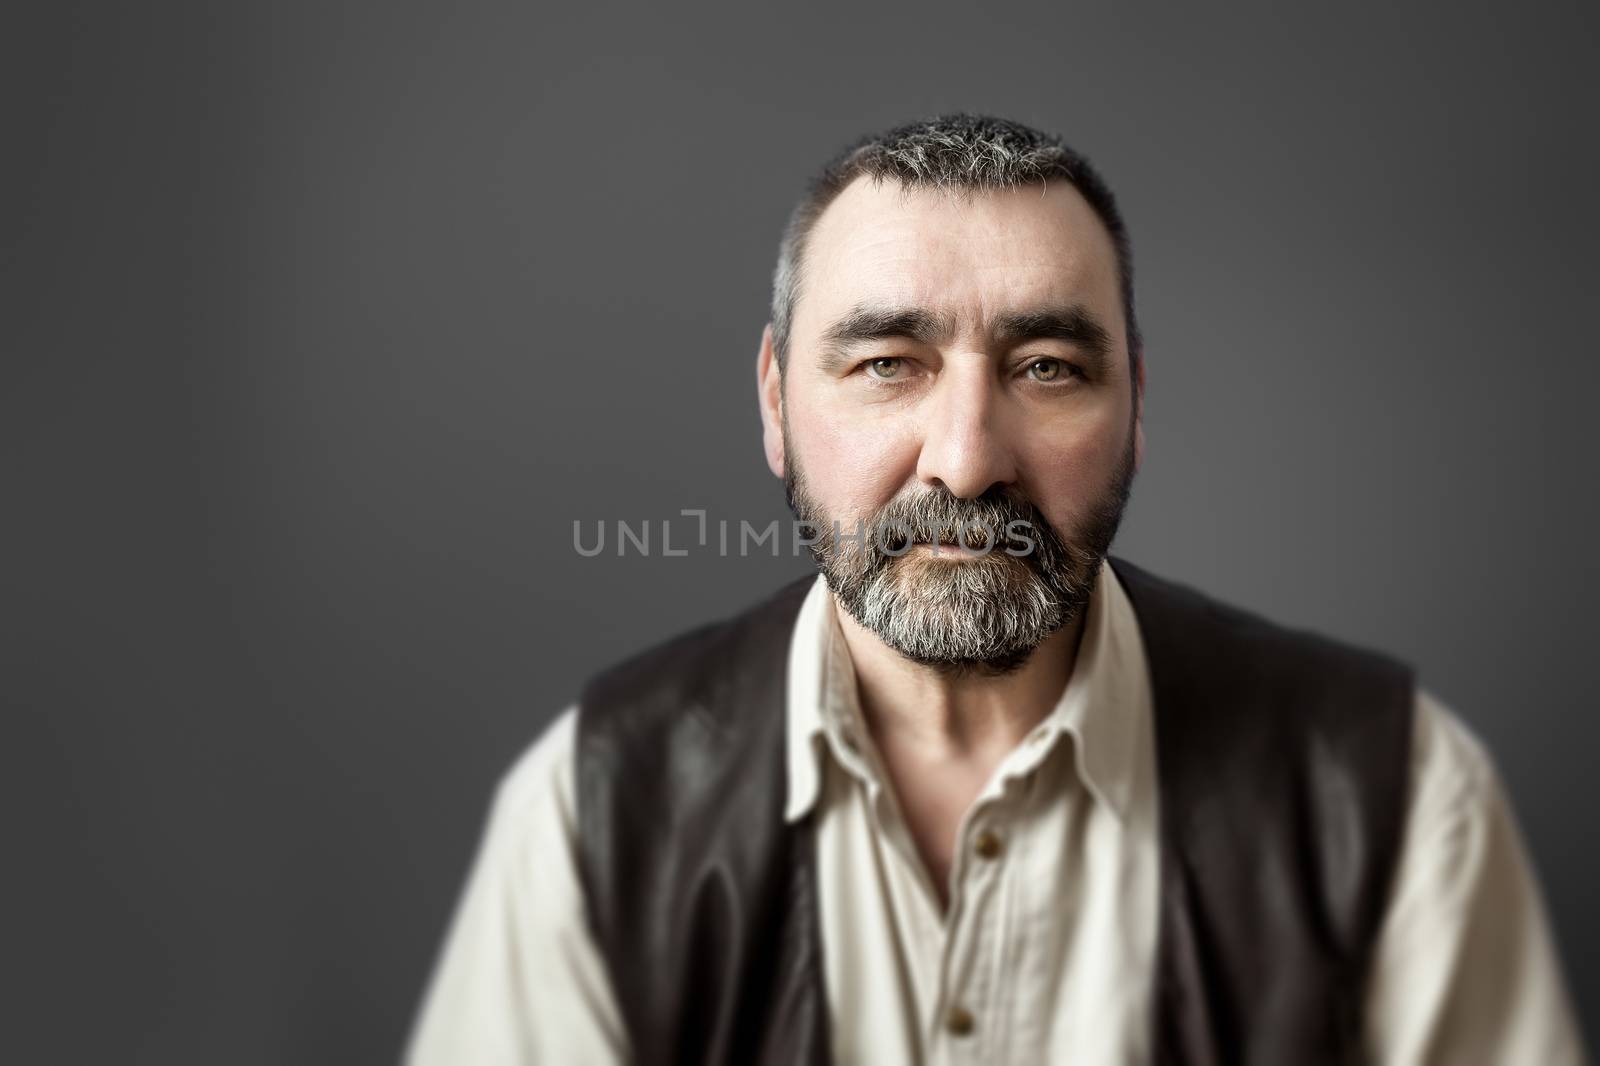 An image of a man with a beard